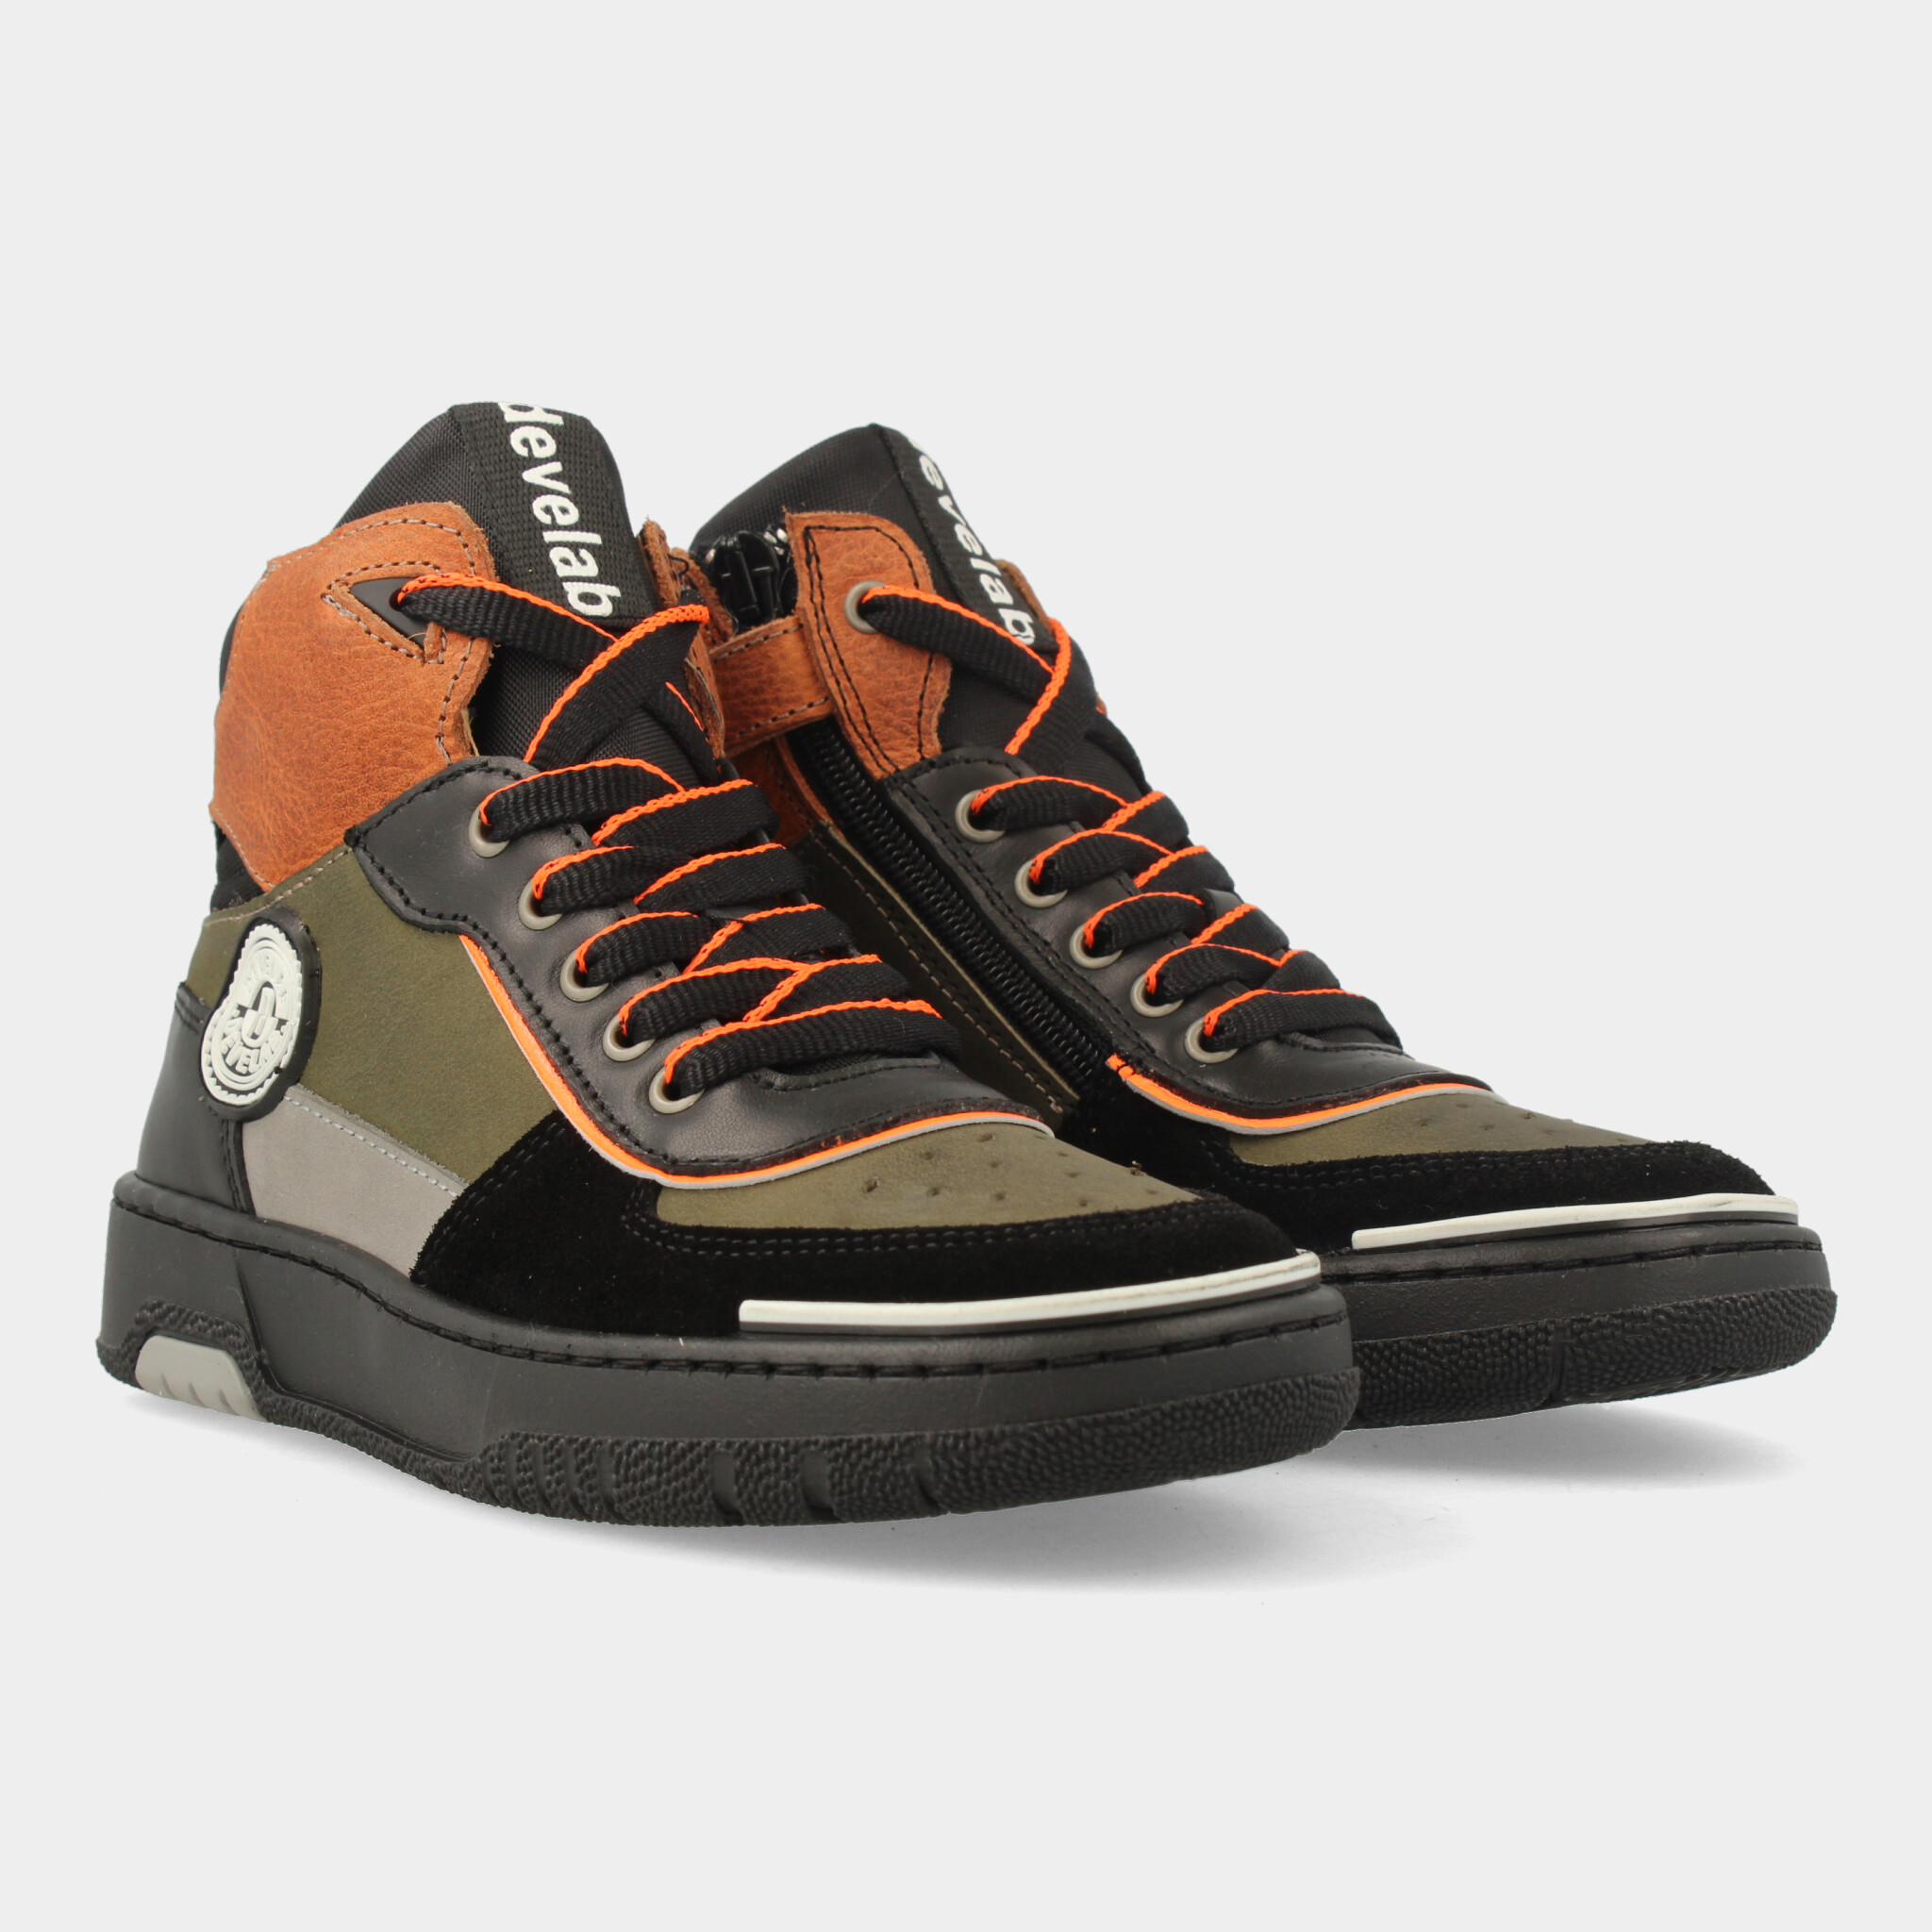 Hoge Groene Sneakers | Develab 45721